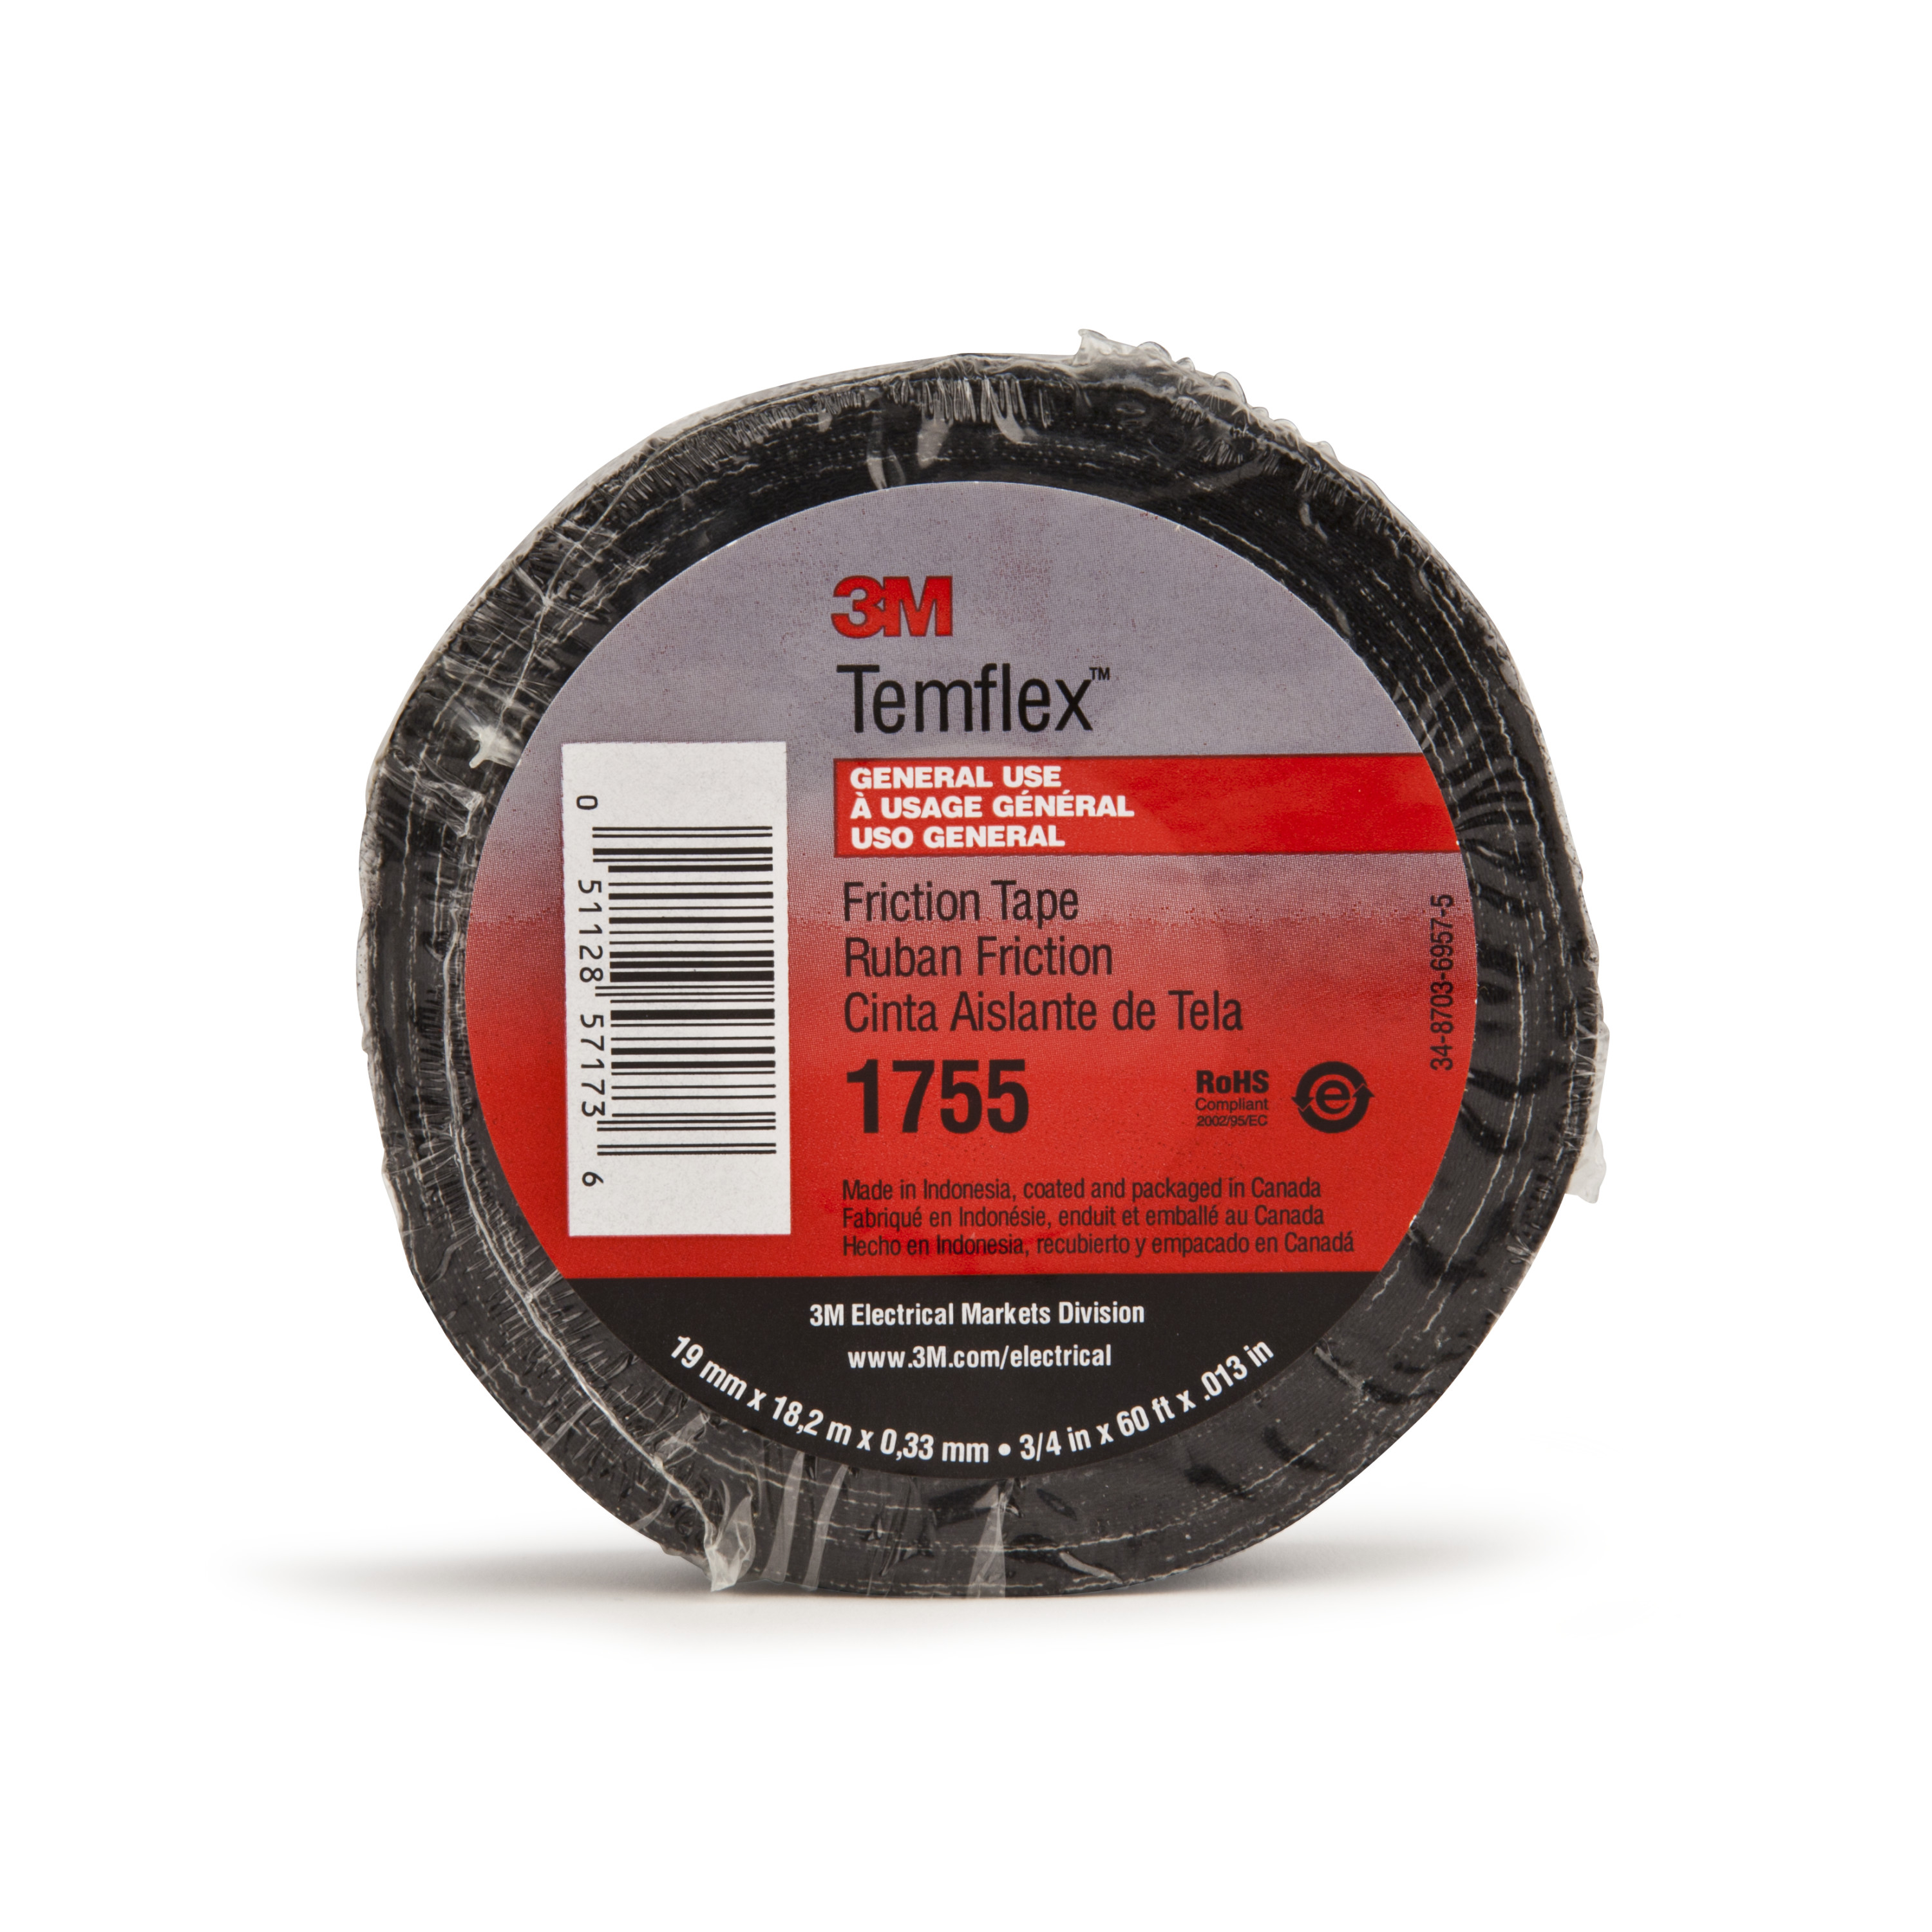 3M™ Temflex™ Cotton Friction Tape 1755, 3/4 in x 82-1/2 ft, Black, 60
rolls/Case